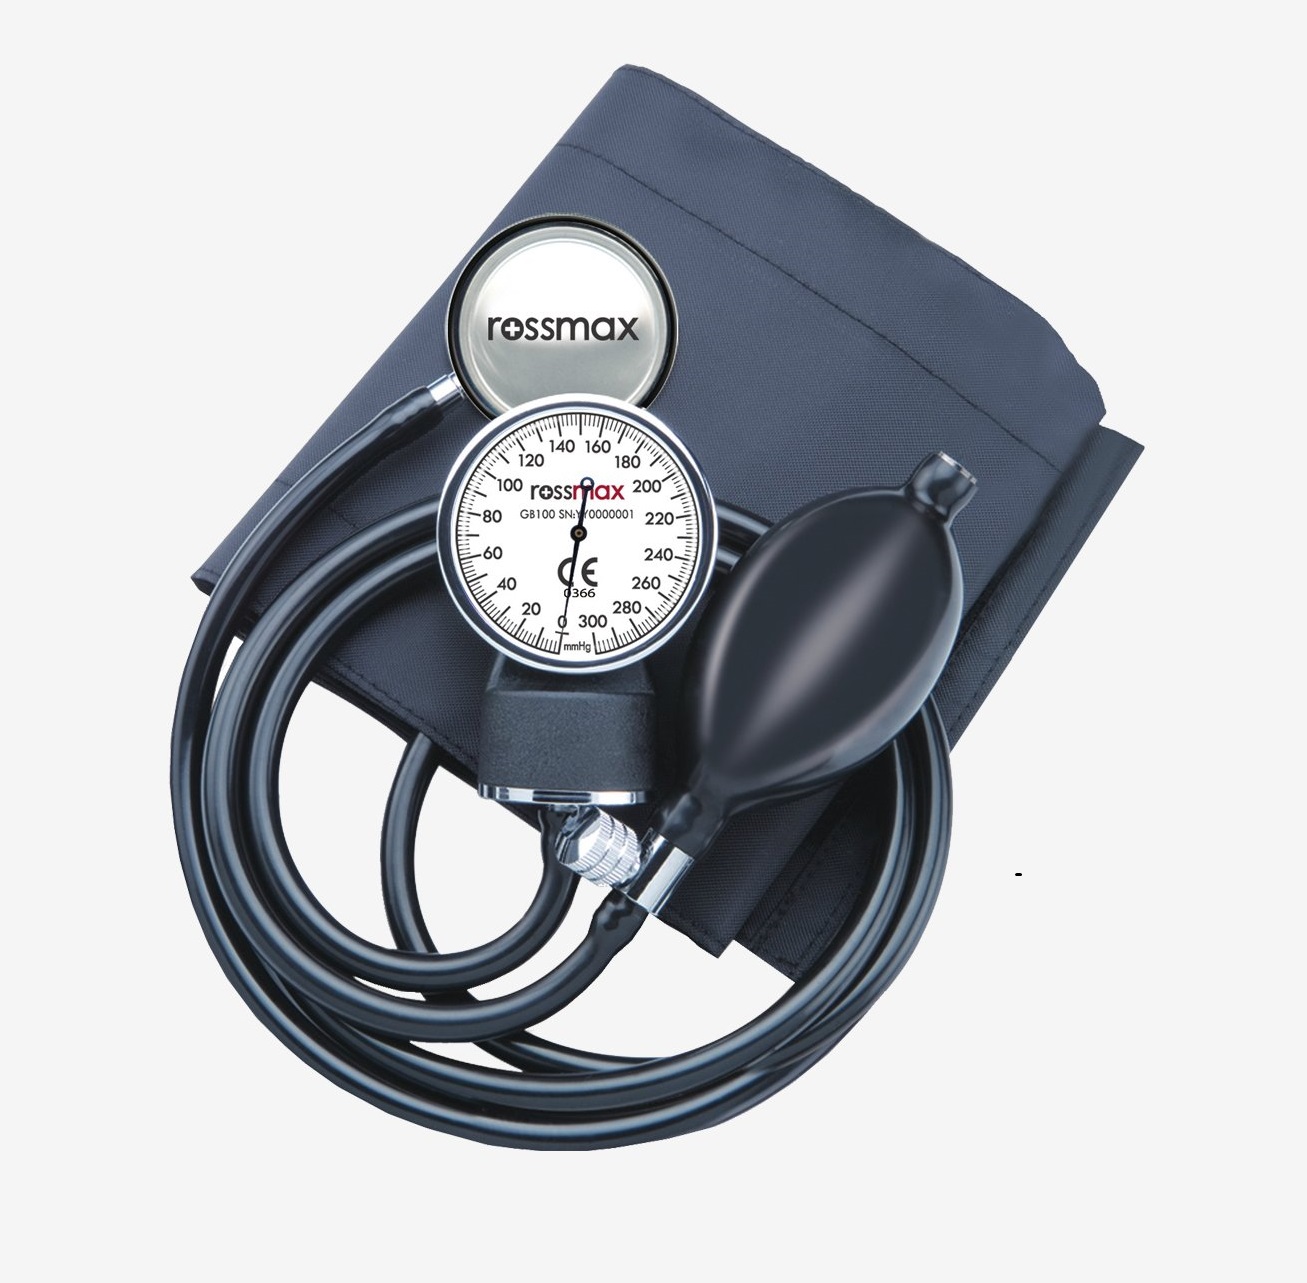 Best Blood Pressure Monitors in India in 2020